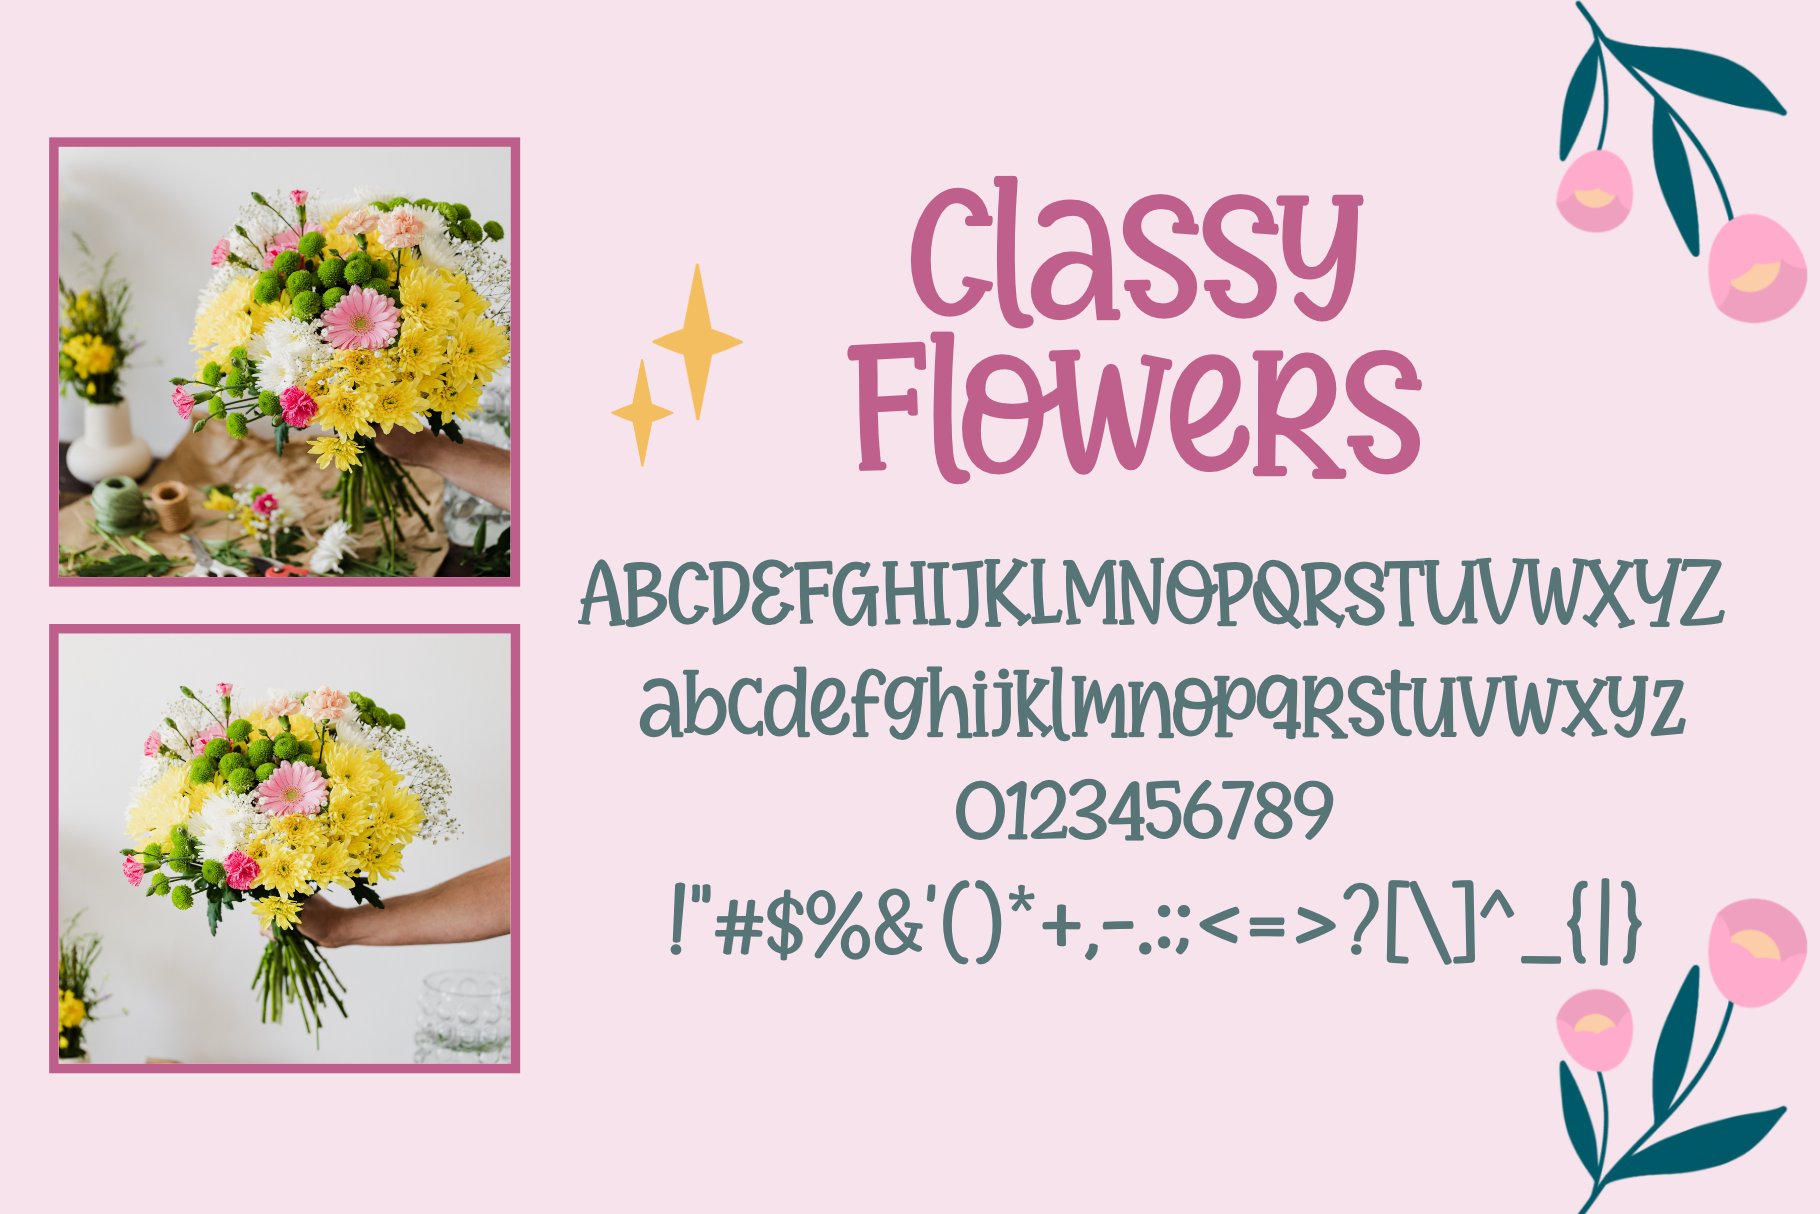 classy flower 8 719